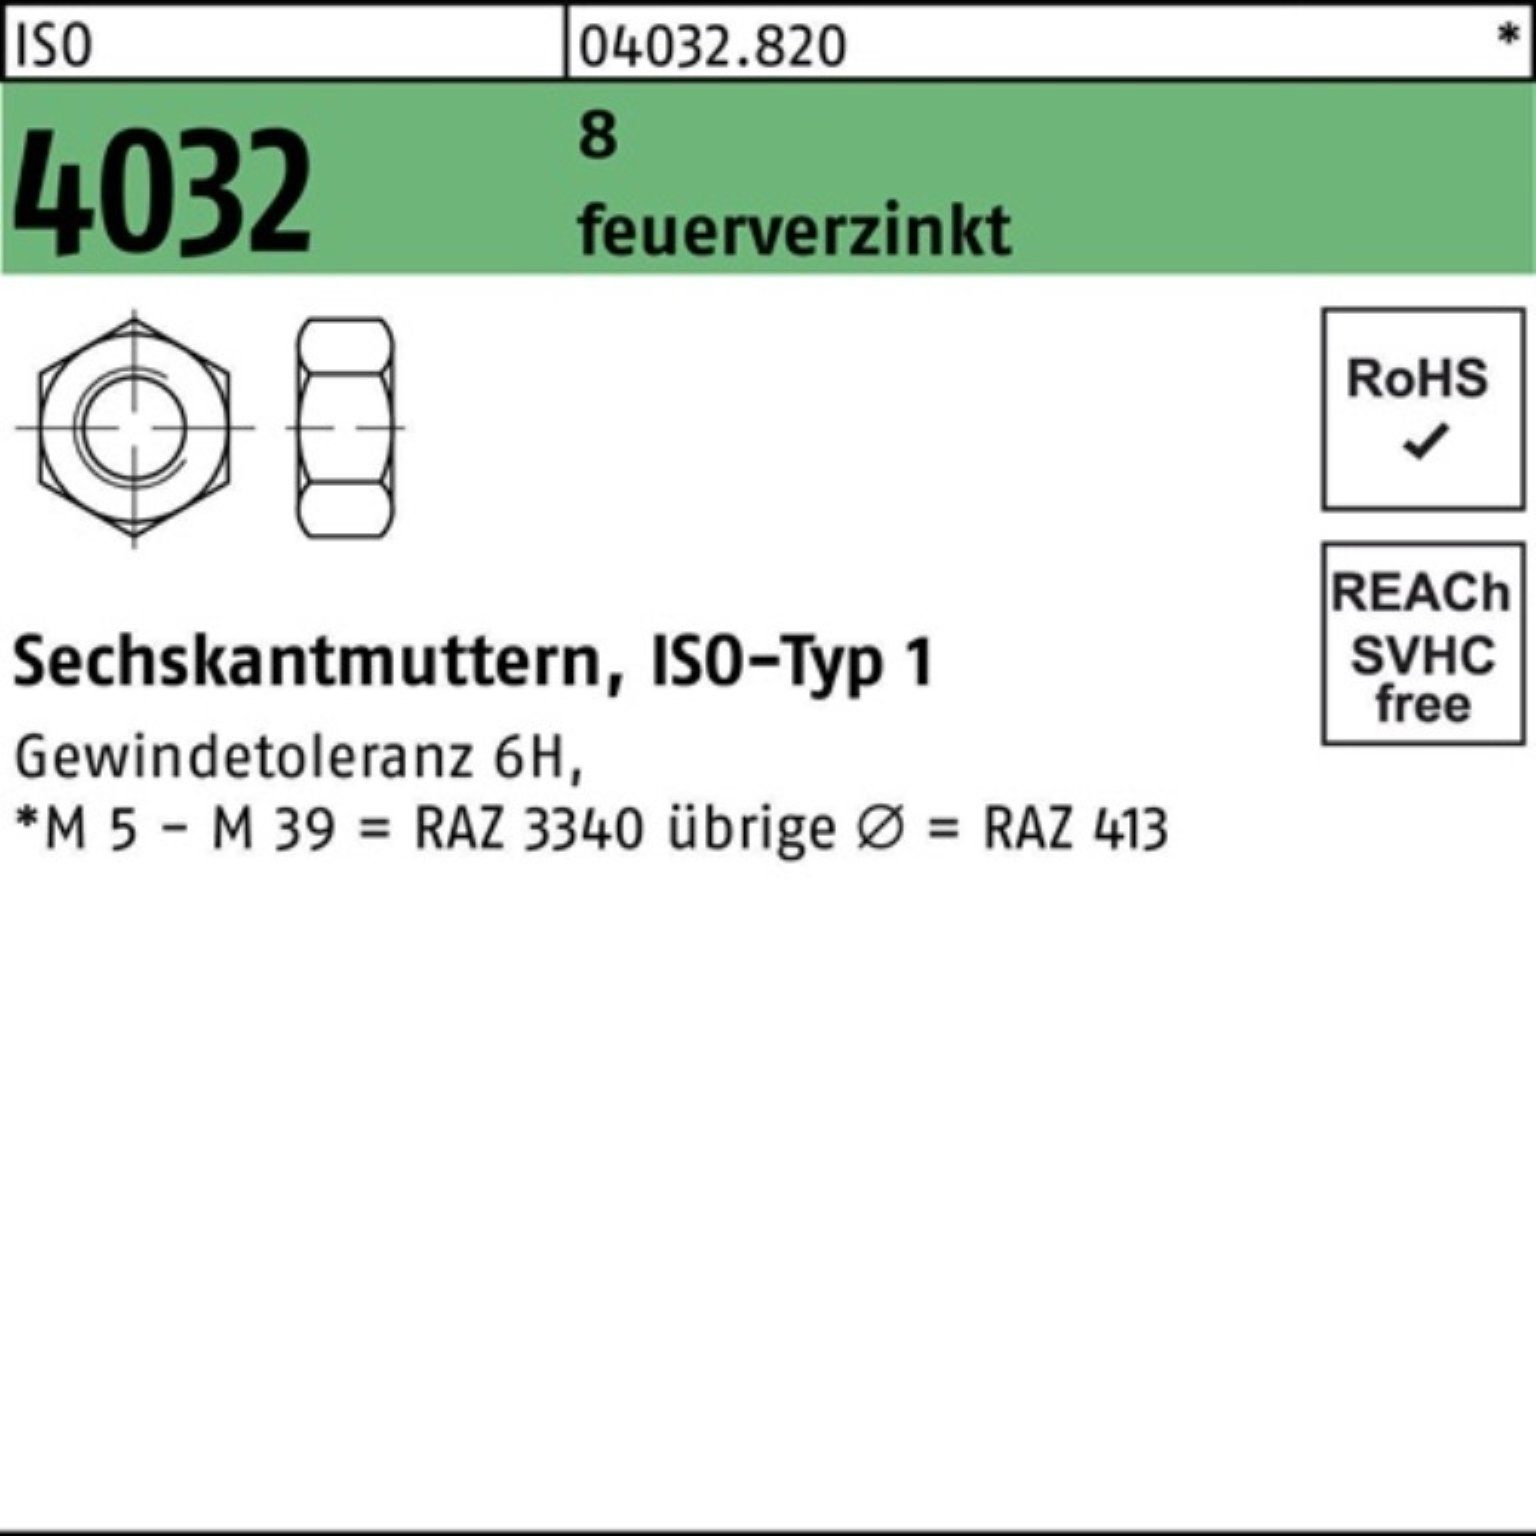 Bufab Muttern 100er Pack Sechskantmutter ISO 4032 M36 8 feuerverz. 10 Stück ISO 403